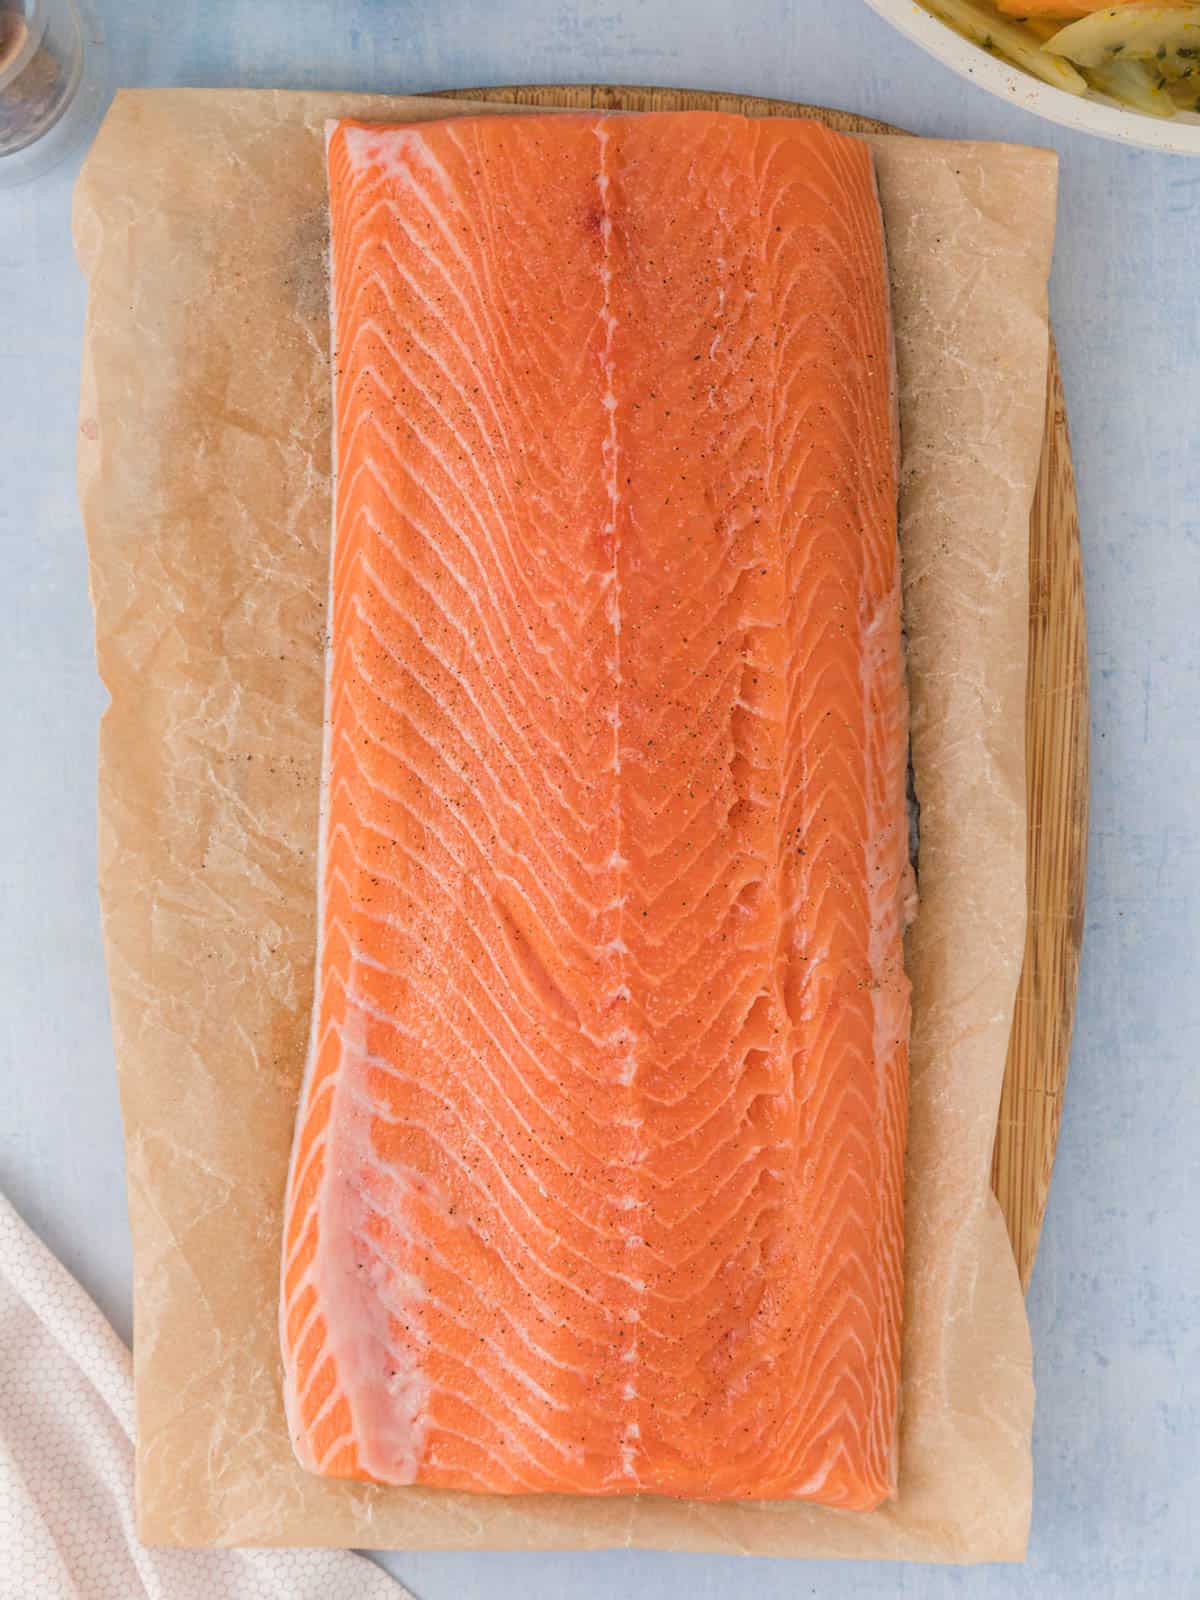 Whole salmon filet on butcher paper.